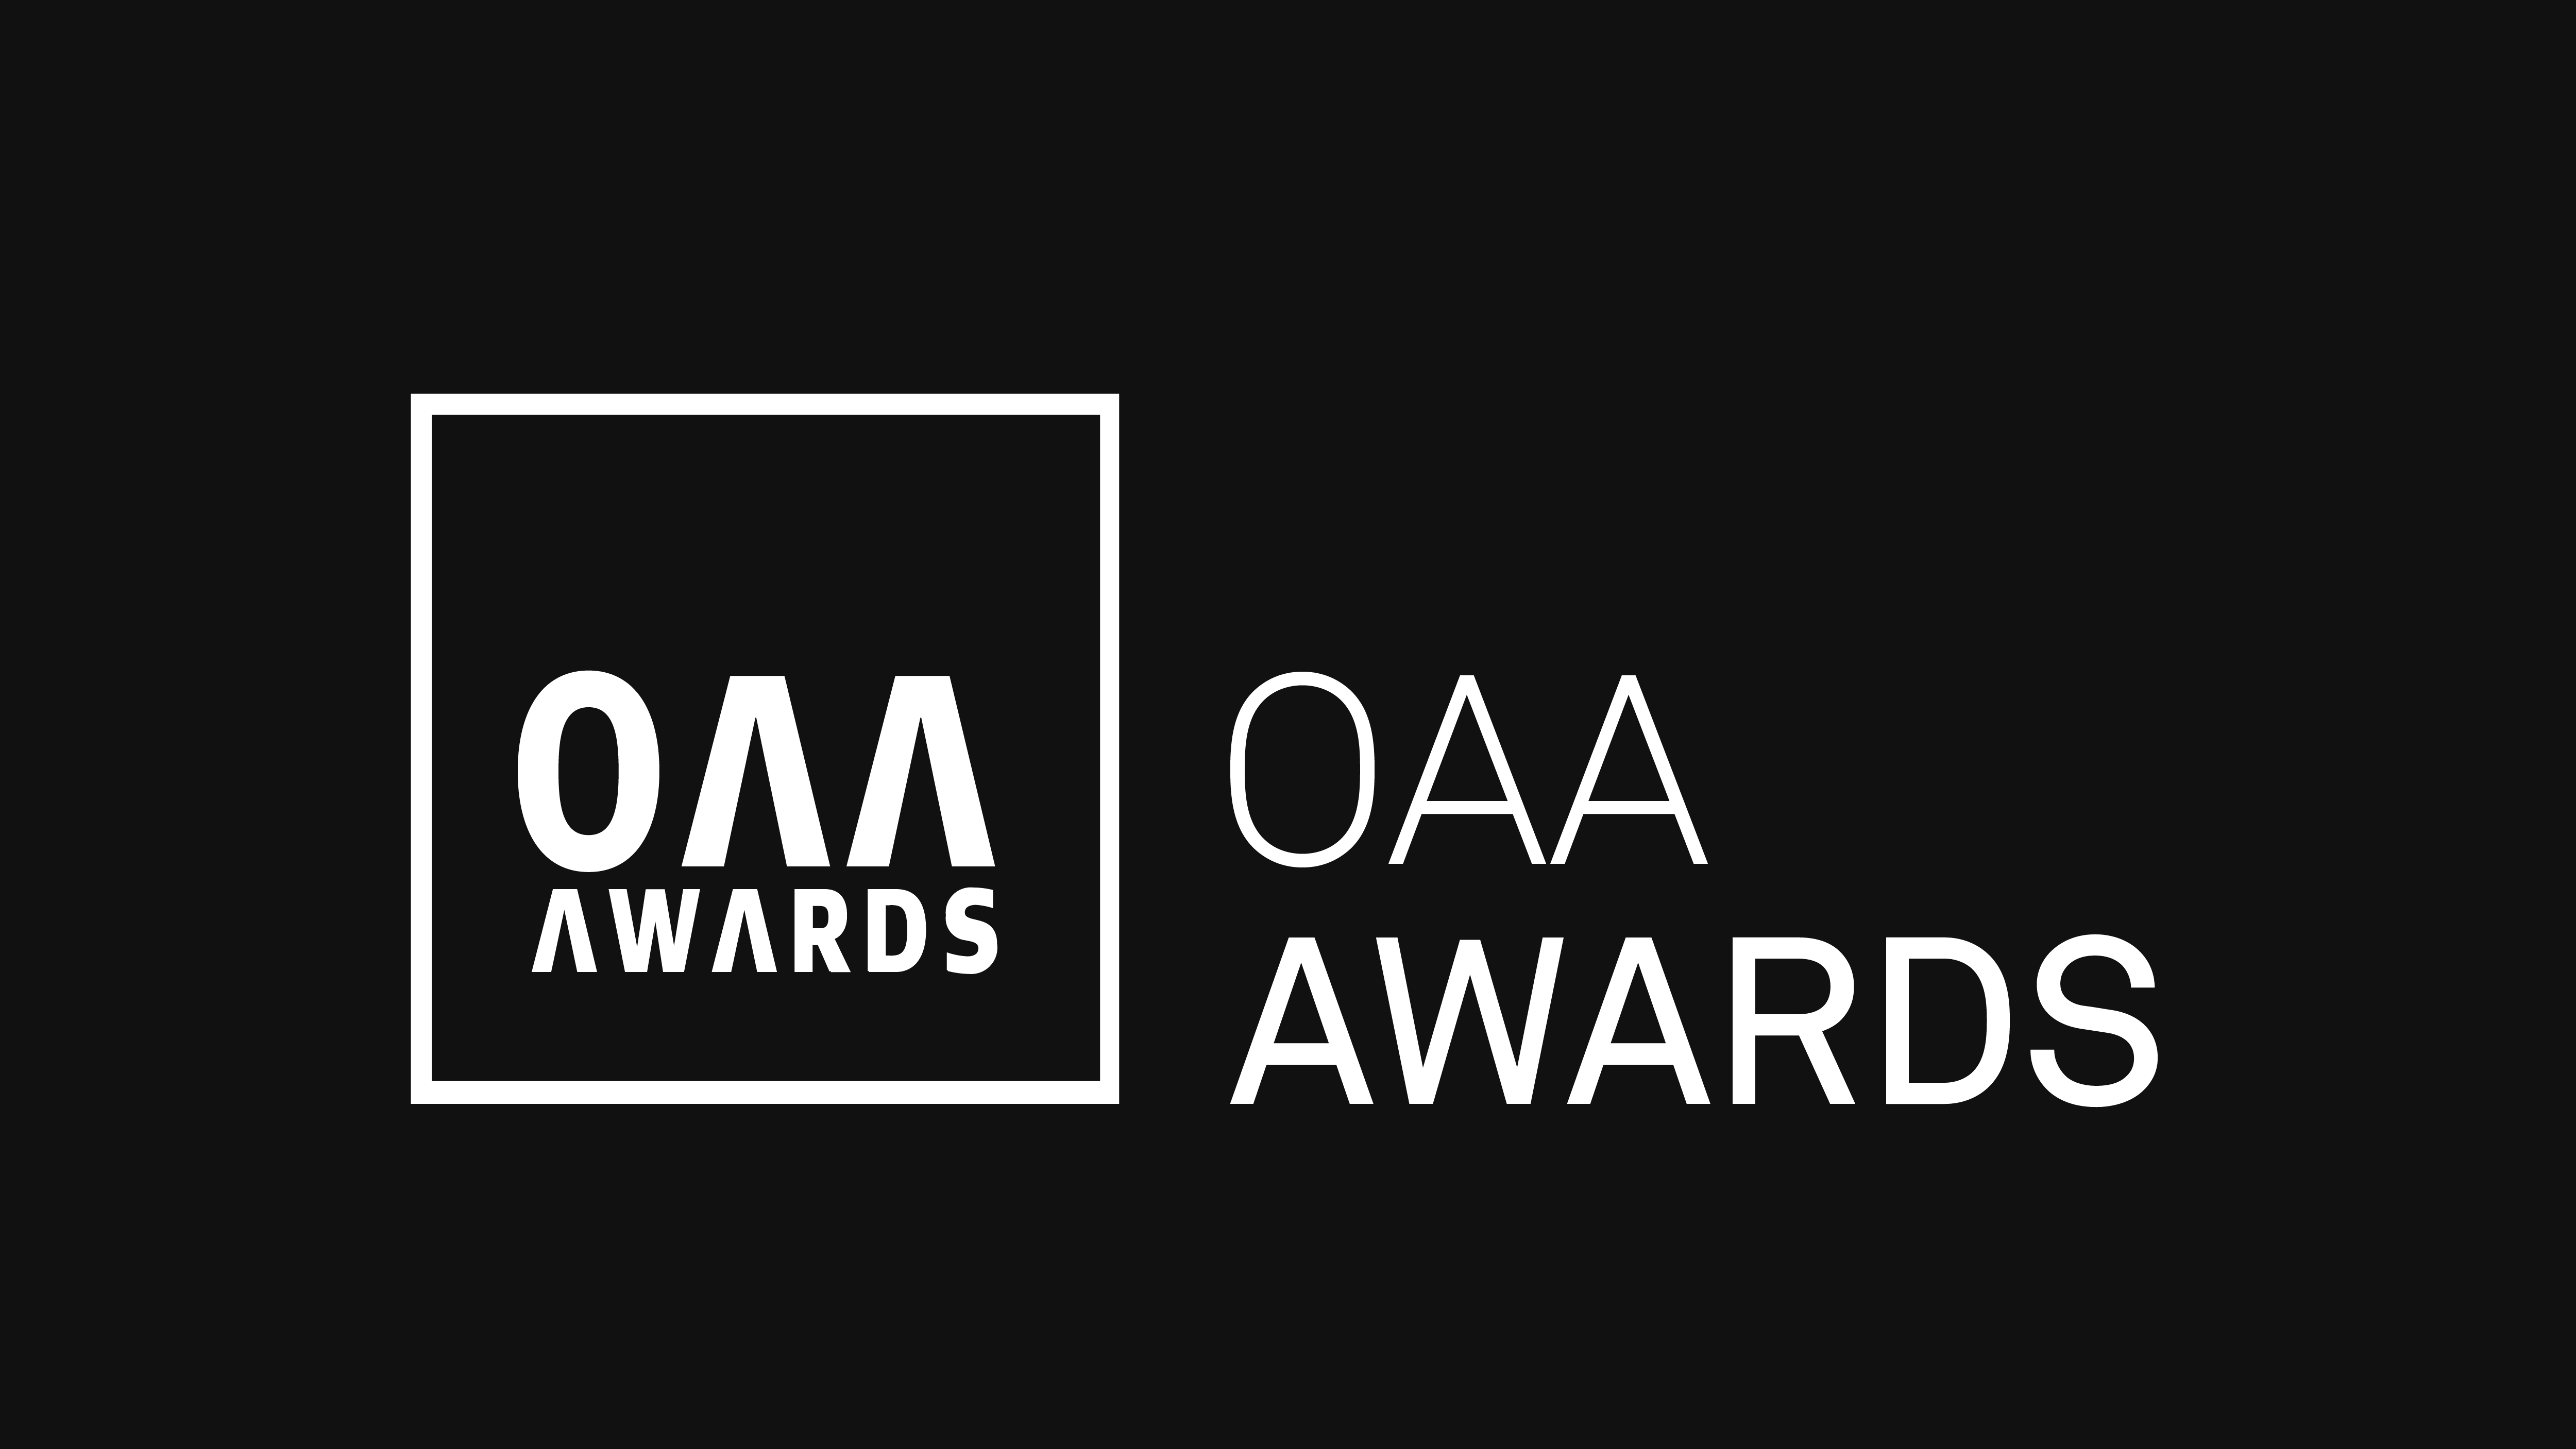 OAA Awards banner